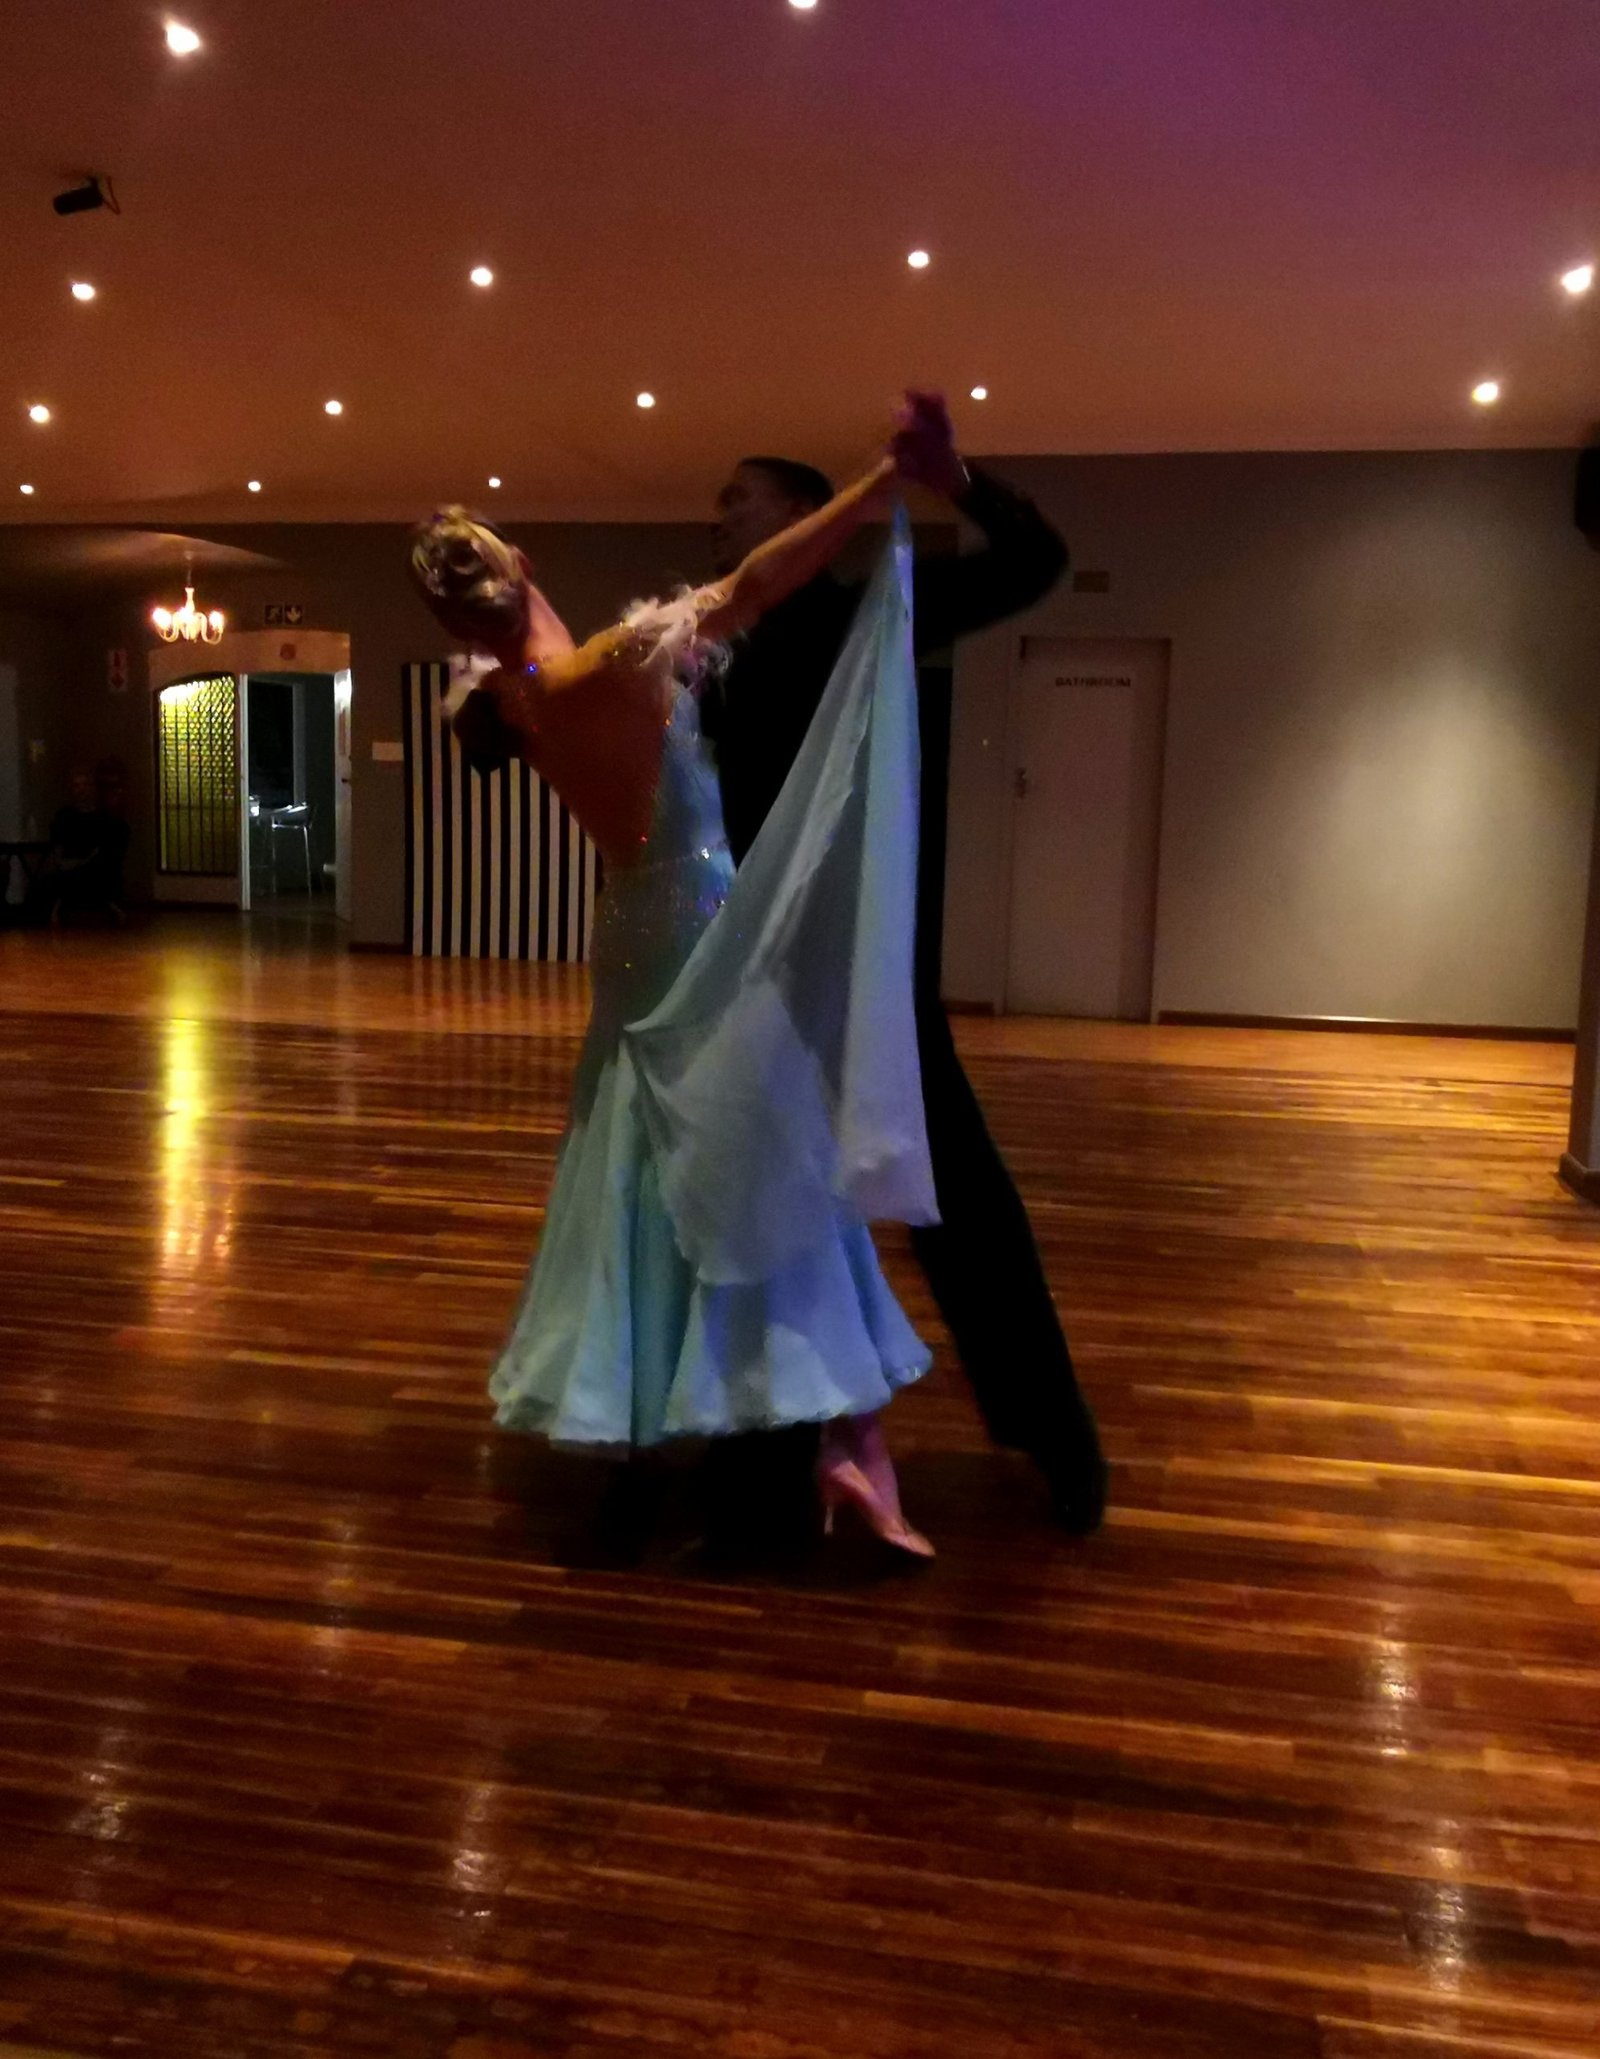 Dance demonstration of the Slow Waltz, Ballroom Tango and Foxtrot